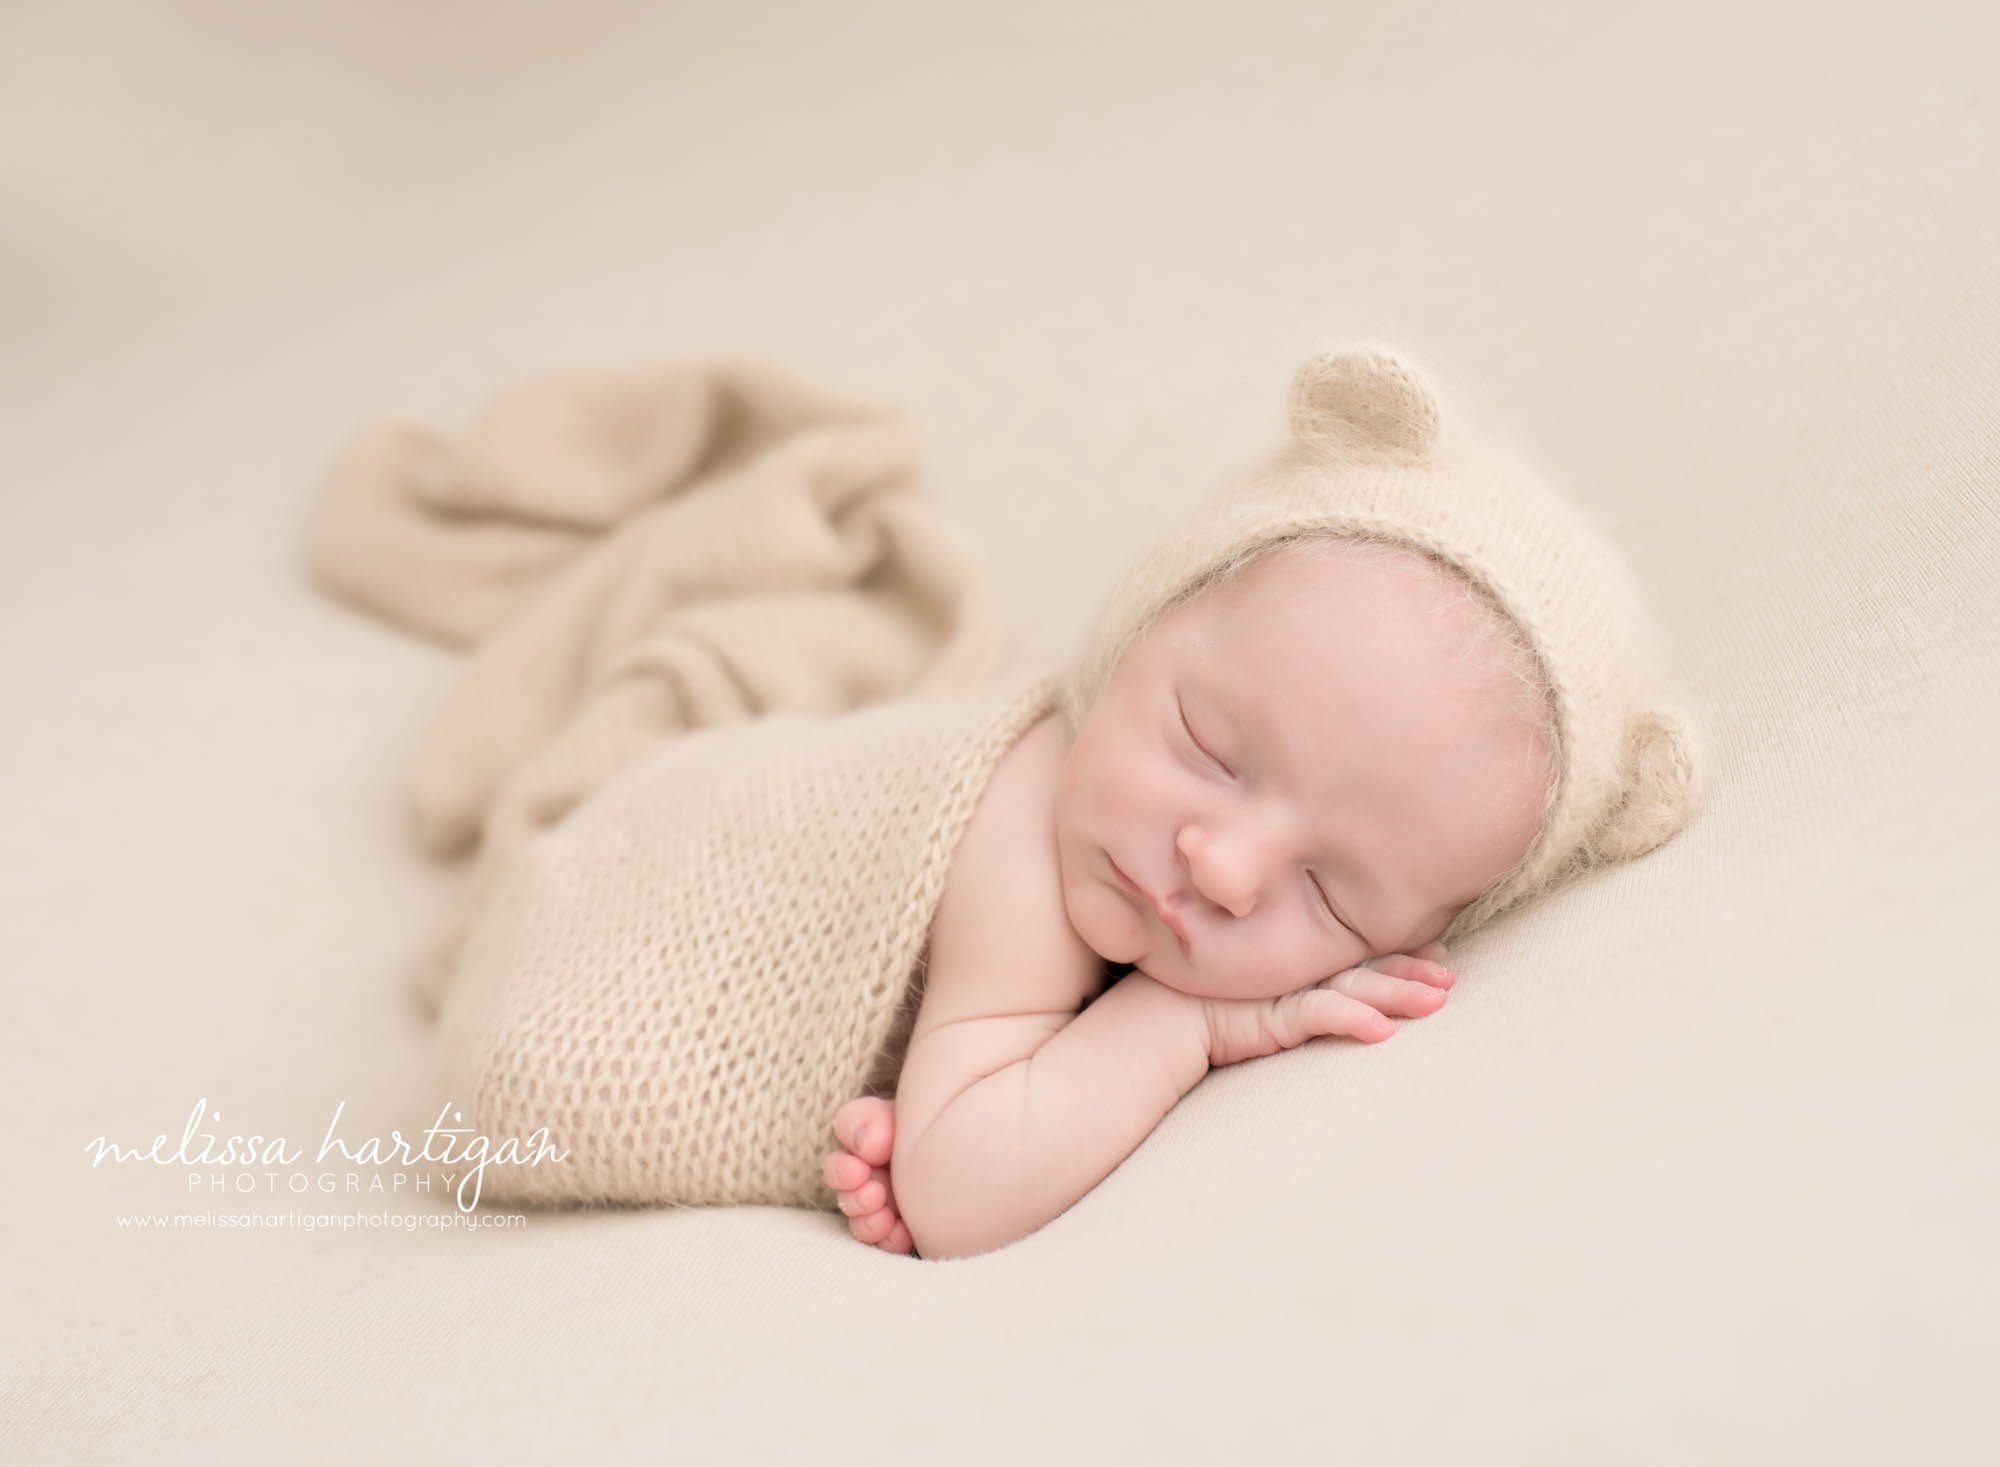 Melissa Hartigan Photography CT Newborn Photographer Stafford baby boy sleeping wearing cream knit ear with ears and matching blanket